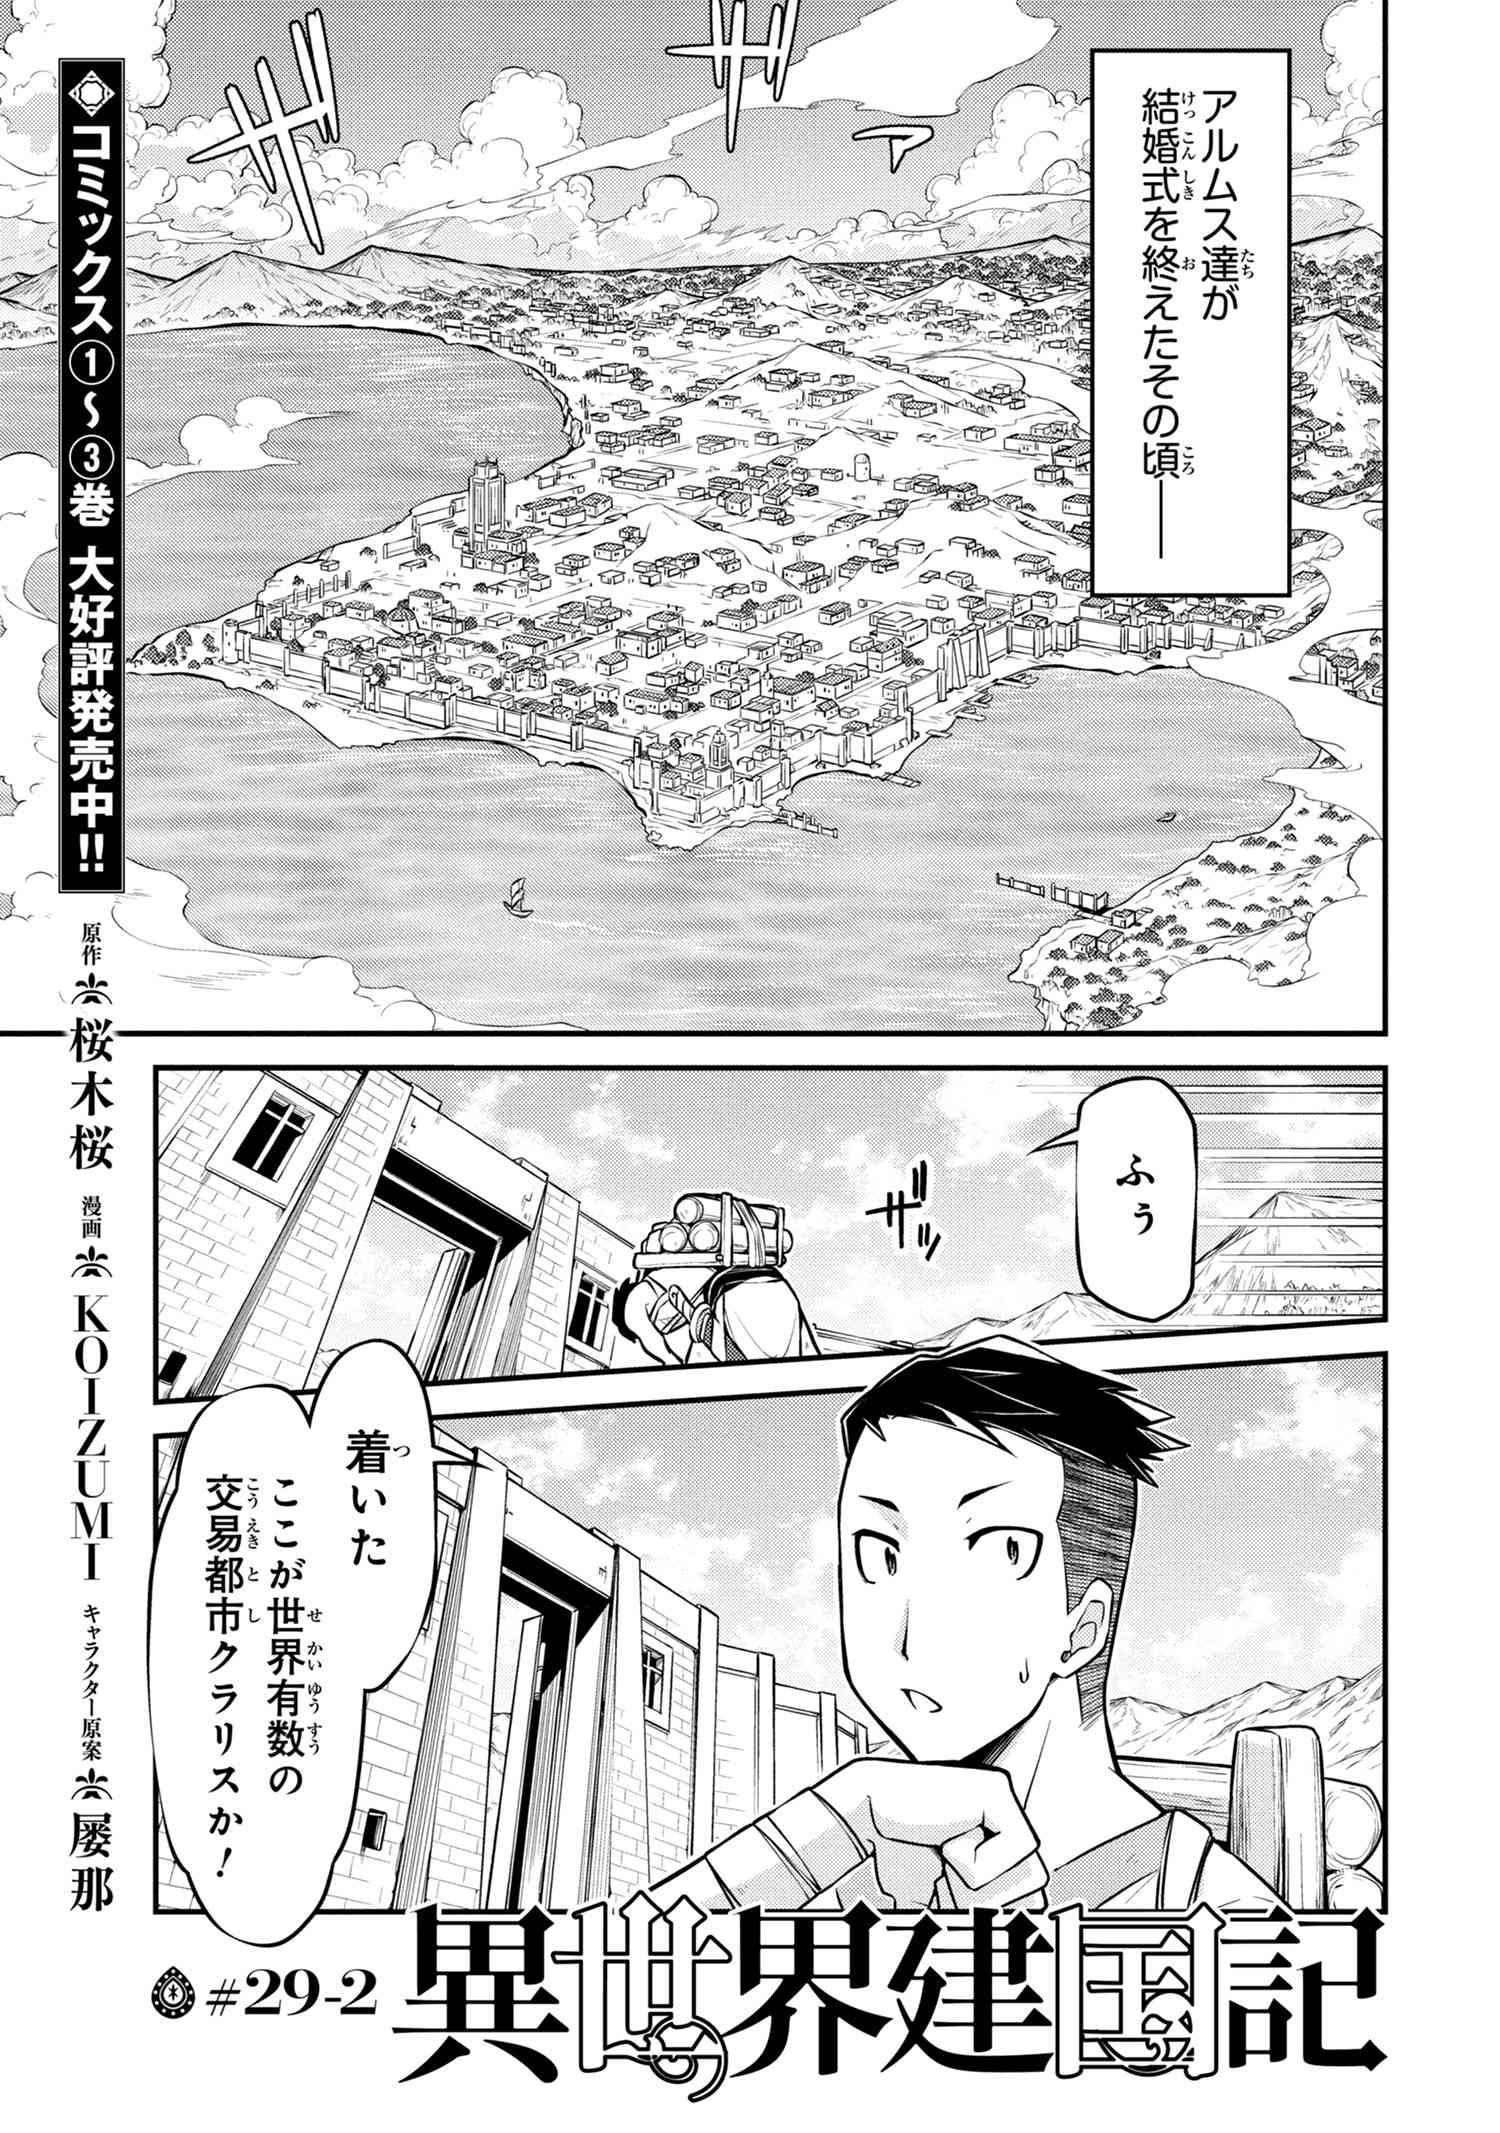 Isekai Kenkokuki - Chapter 29-2 - Page 1